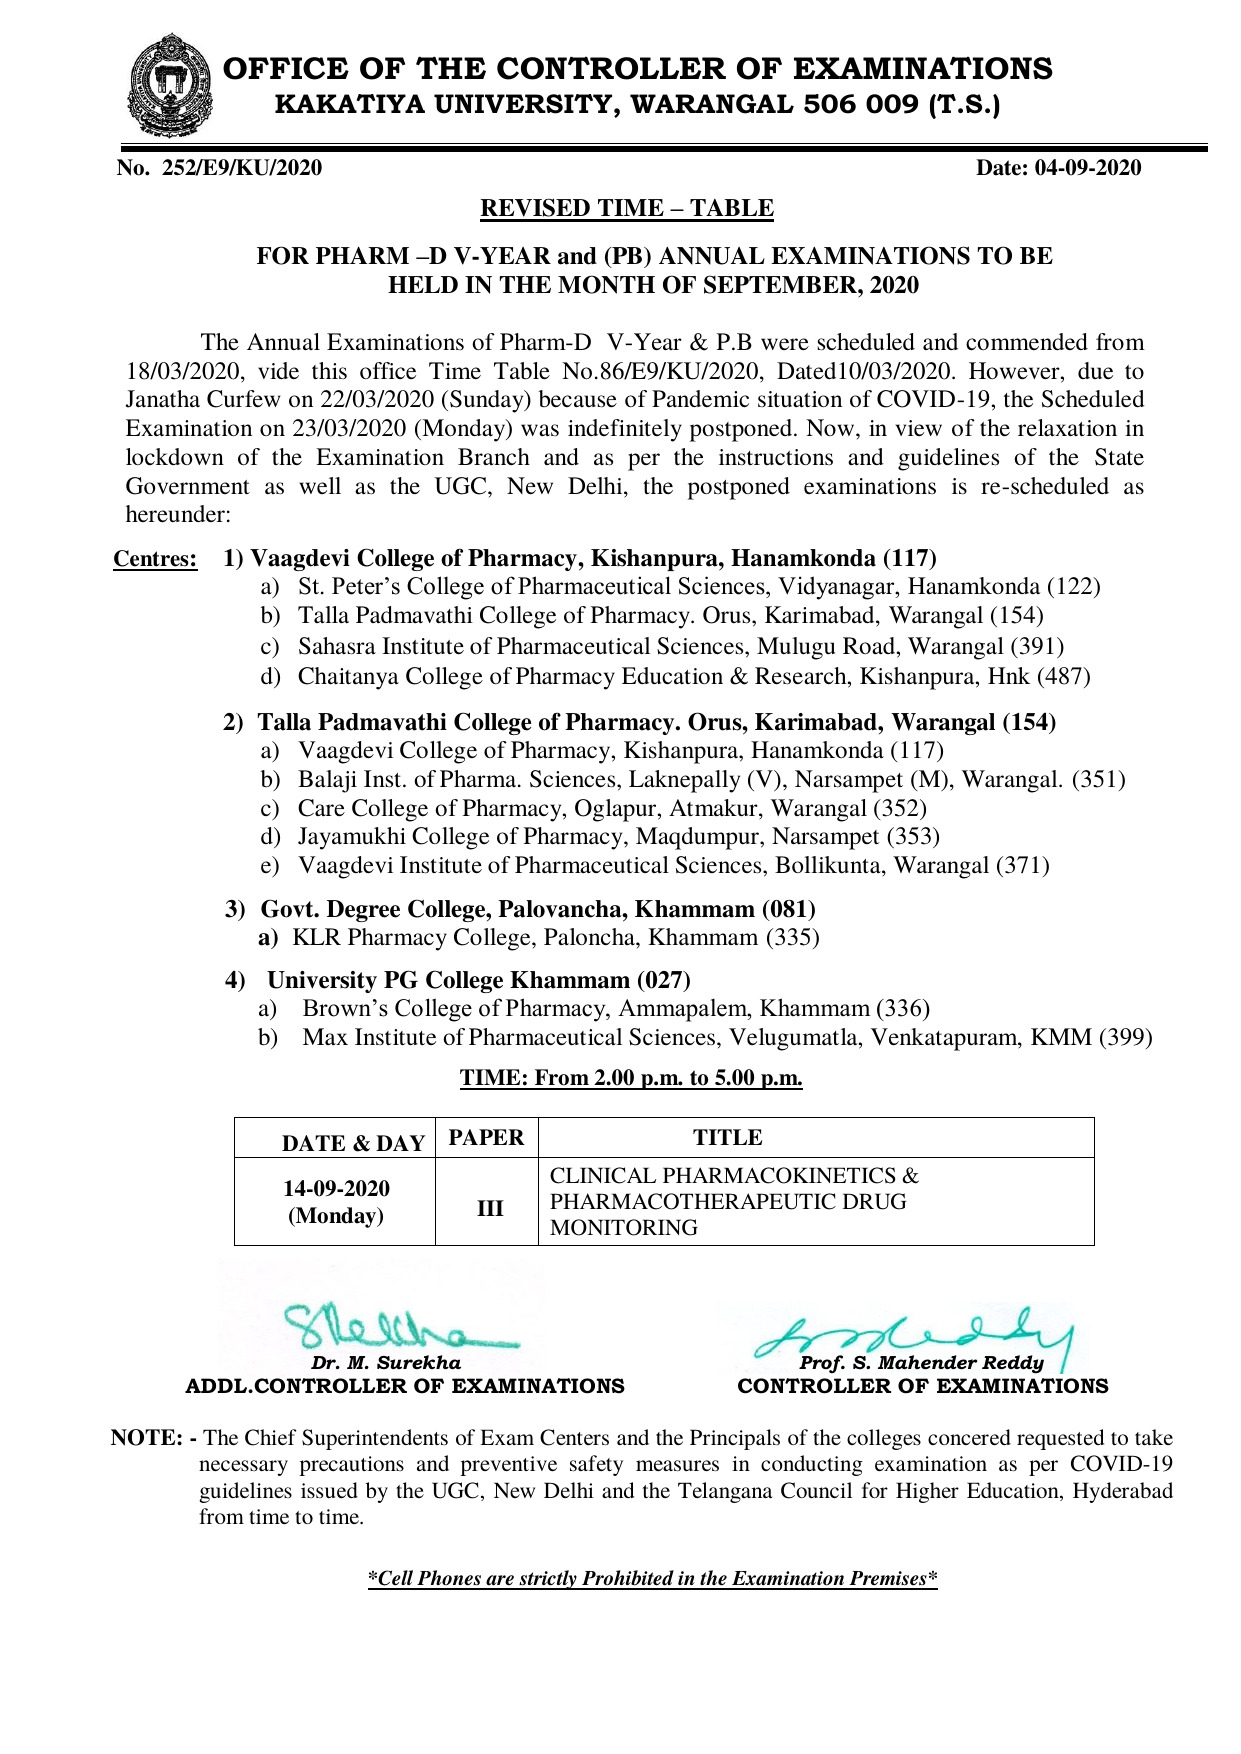 Kakatiya University Pharma D 5th Year Sep 2020 Exam Revised Time Table